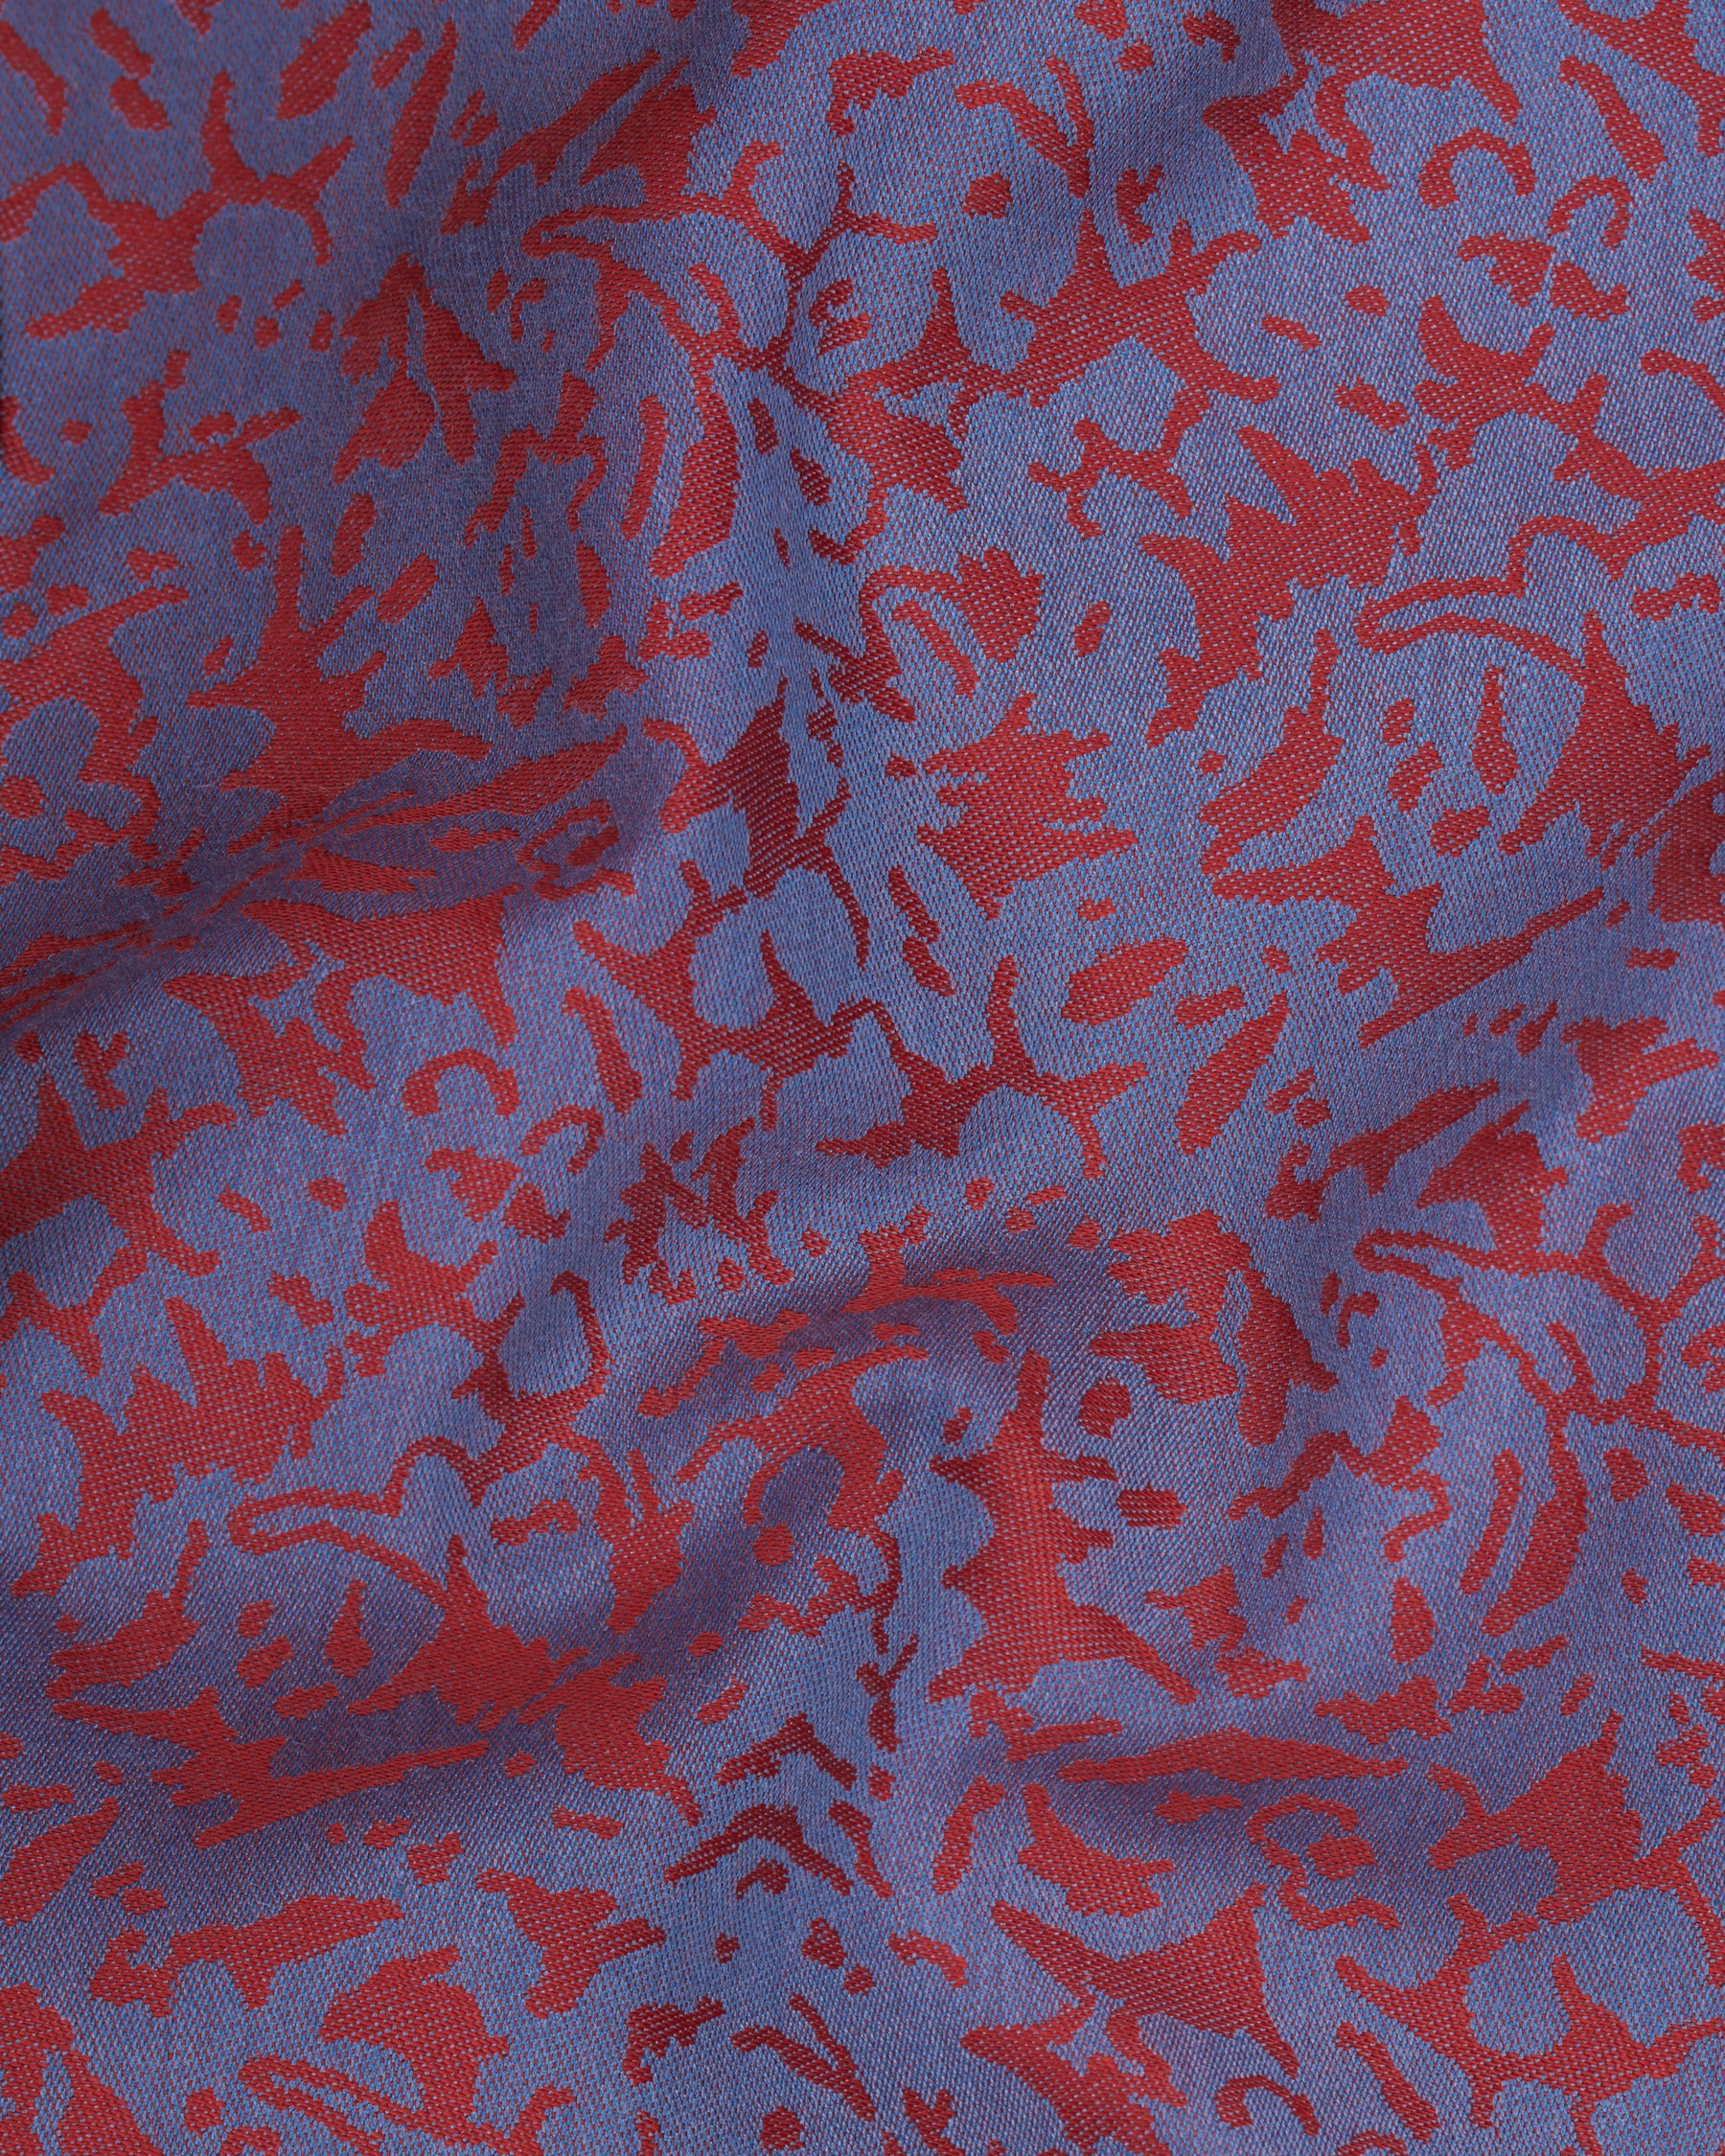 Waikawa Blue with Sanguine Red Jacquard Textured Designer Nehru Jacket  WC2190-36, WC2190-38, WC2190-40, WC2190-42, WC2190-44, WC2190-46, WC2190-48, WC2190-50, WC2190-52, WC2190-54, WC2190-56, WC2190-58, WC2190-60